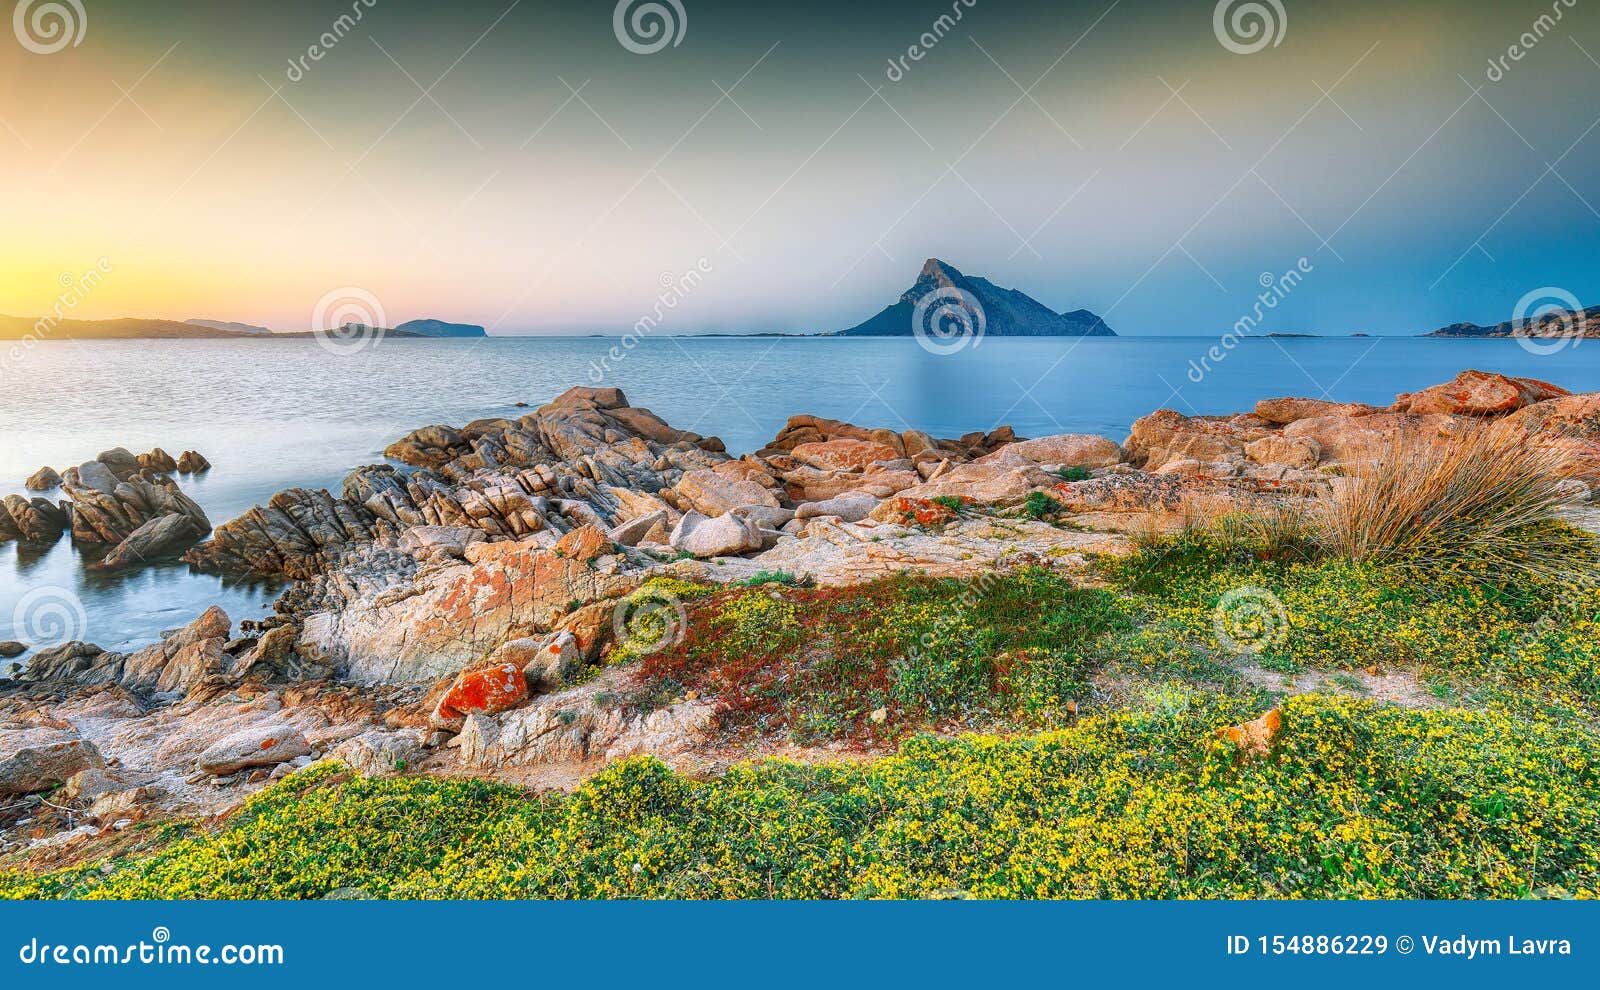 fantastic azure water with rocks near beach porto taverna at sunset